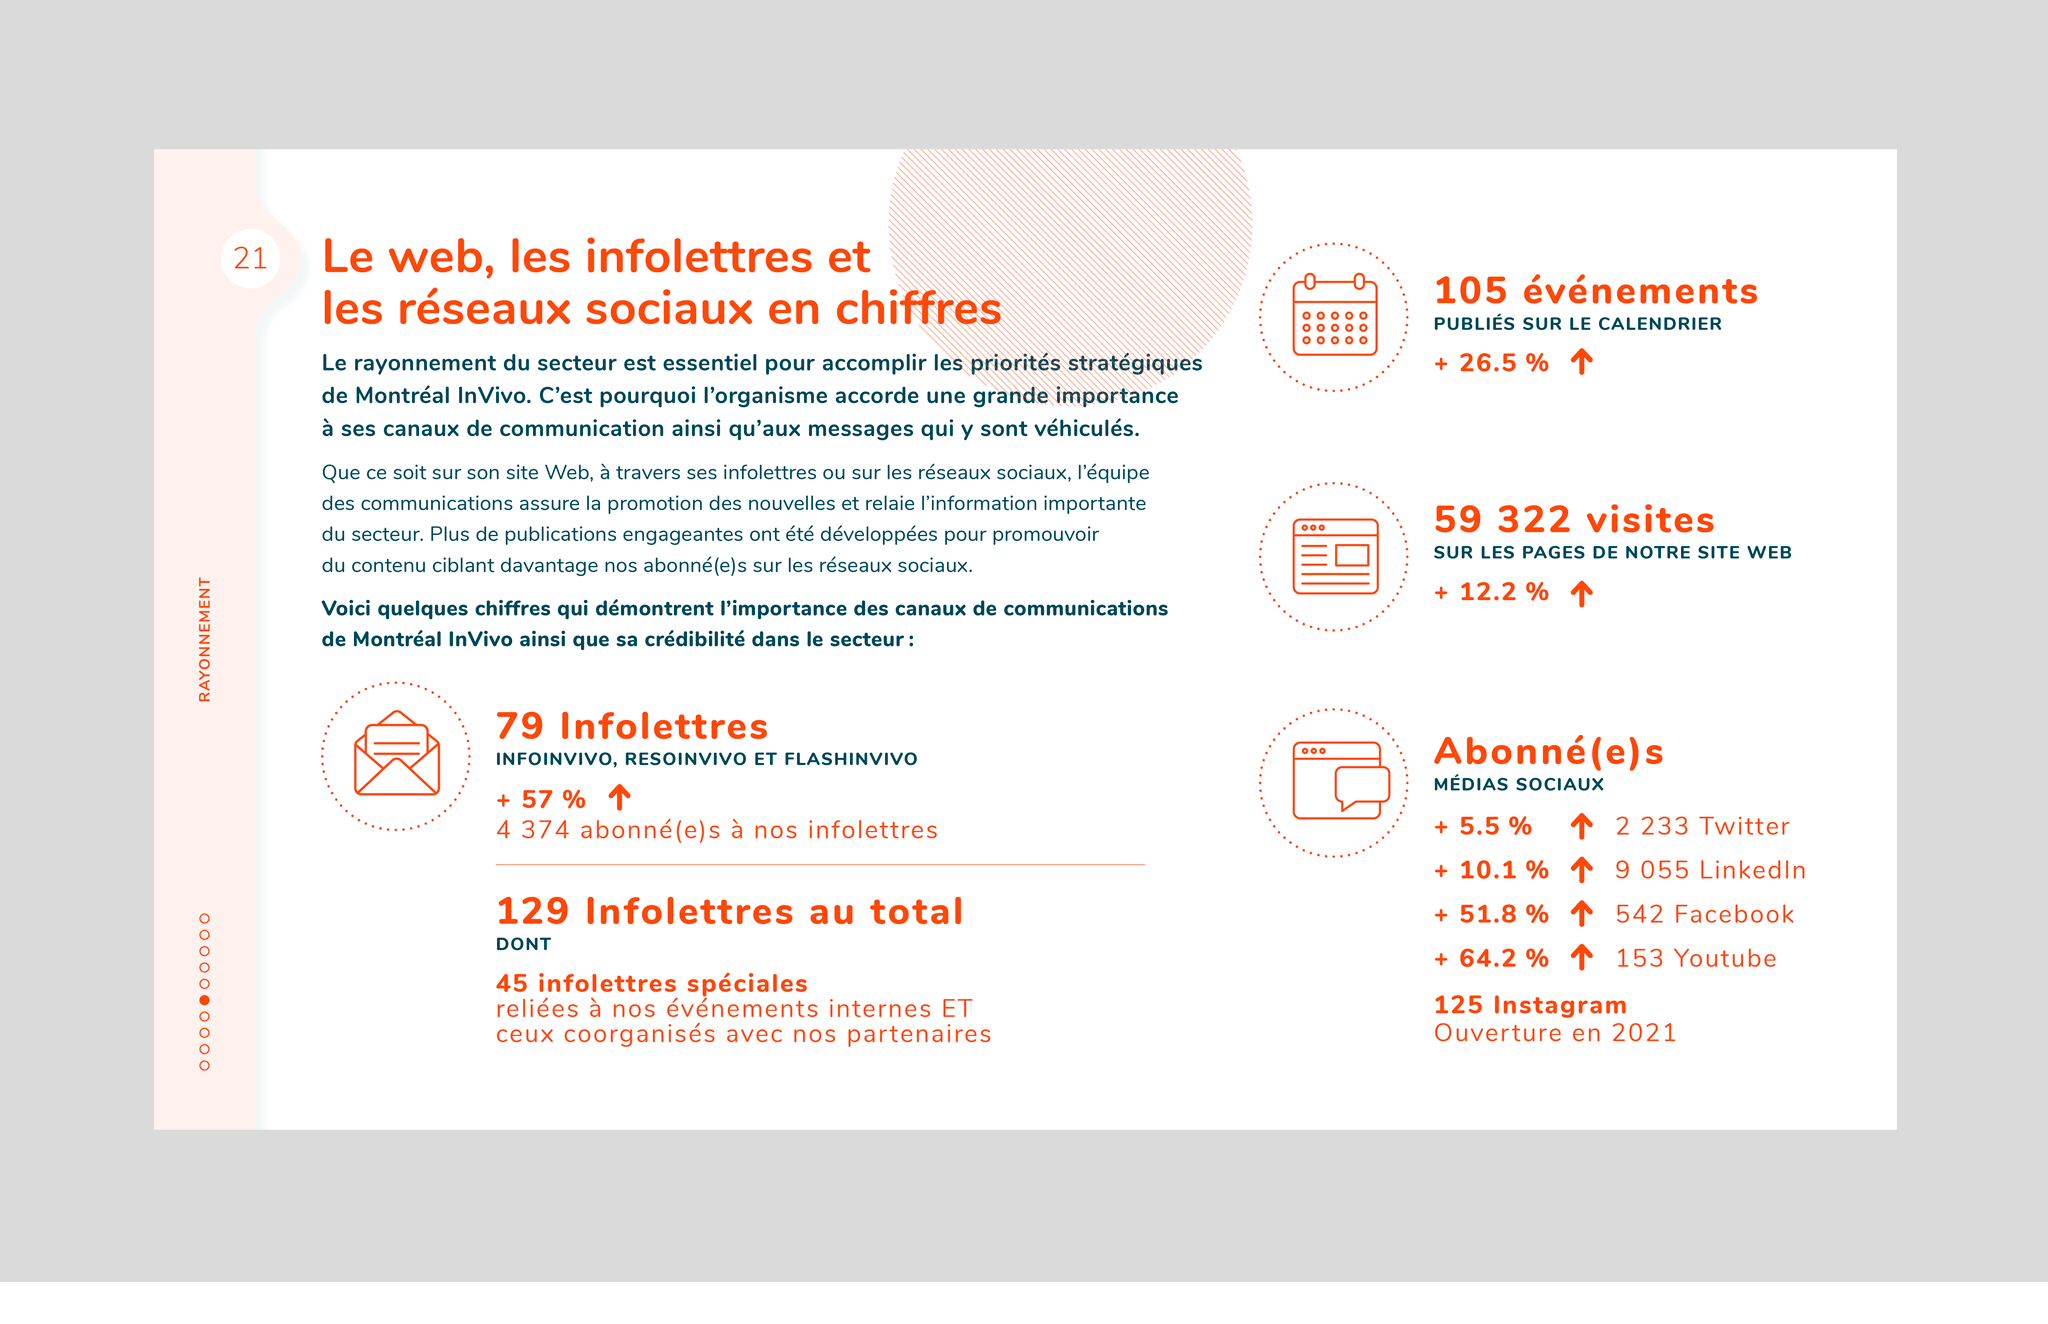 Bilan interactif des activités de Montréal InVivo.